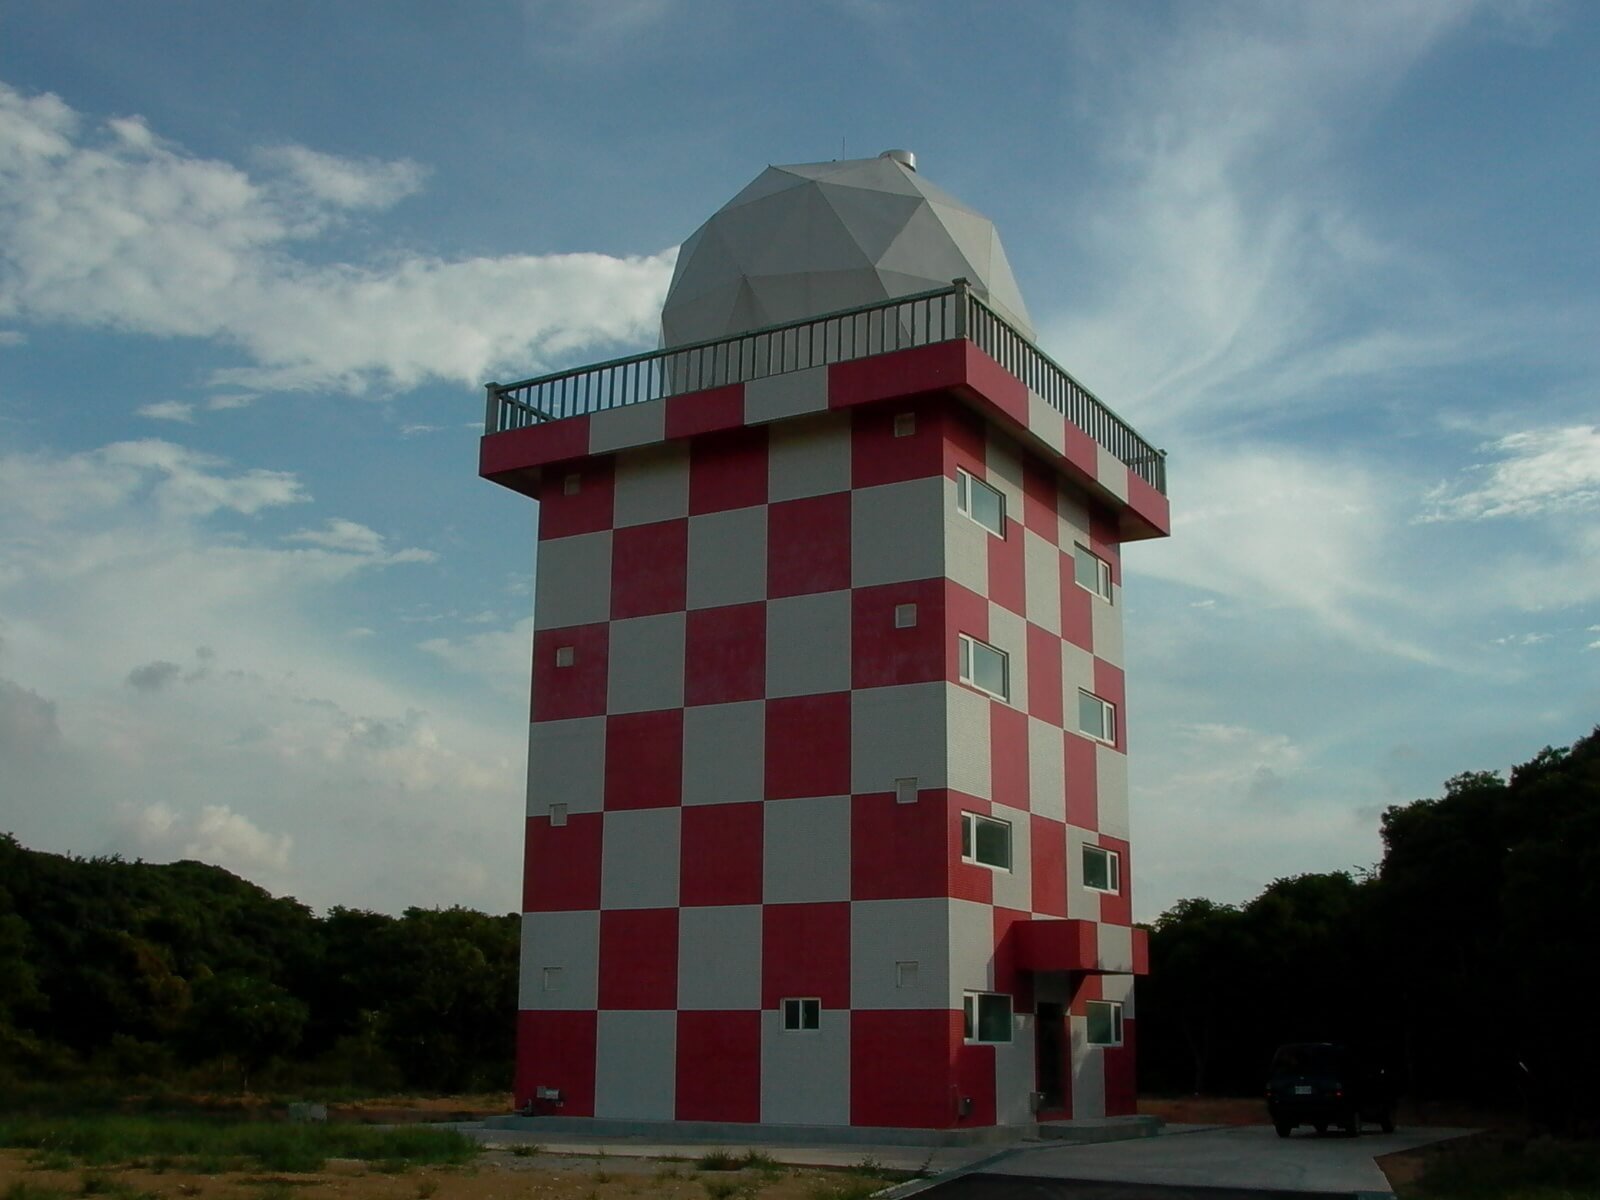 Radar Baron que serve o aeroporto de Taiwan há mais de 15 anos.